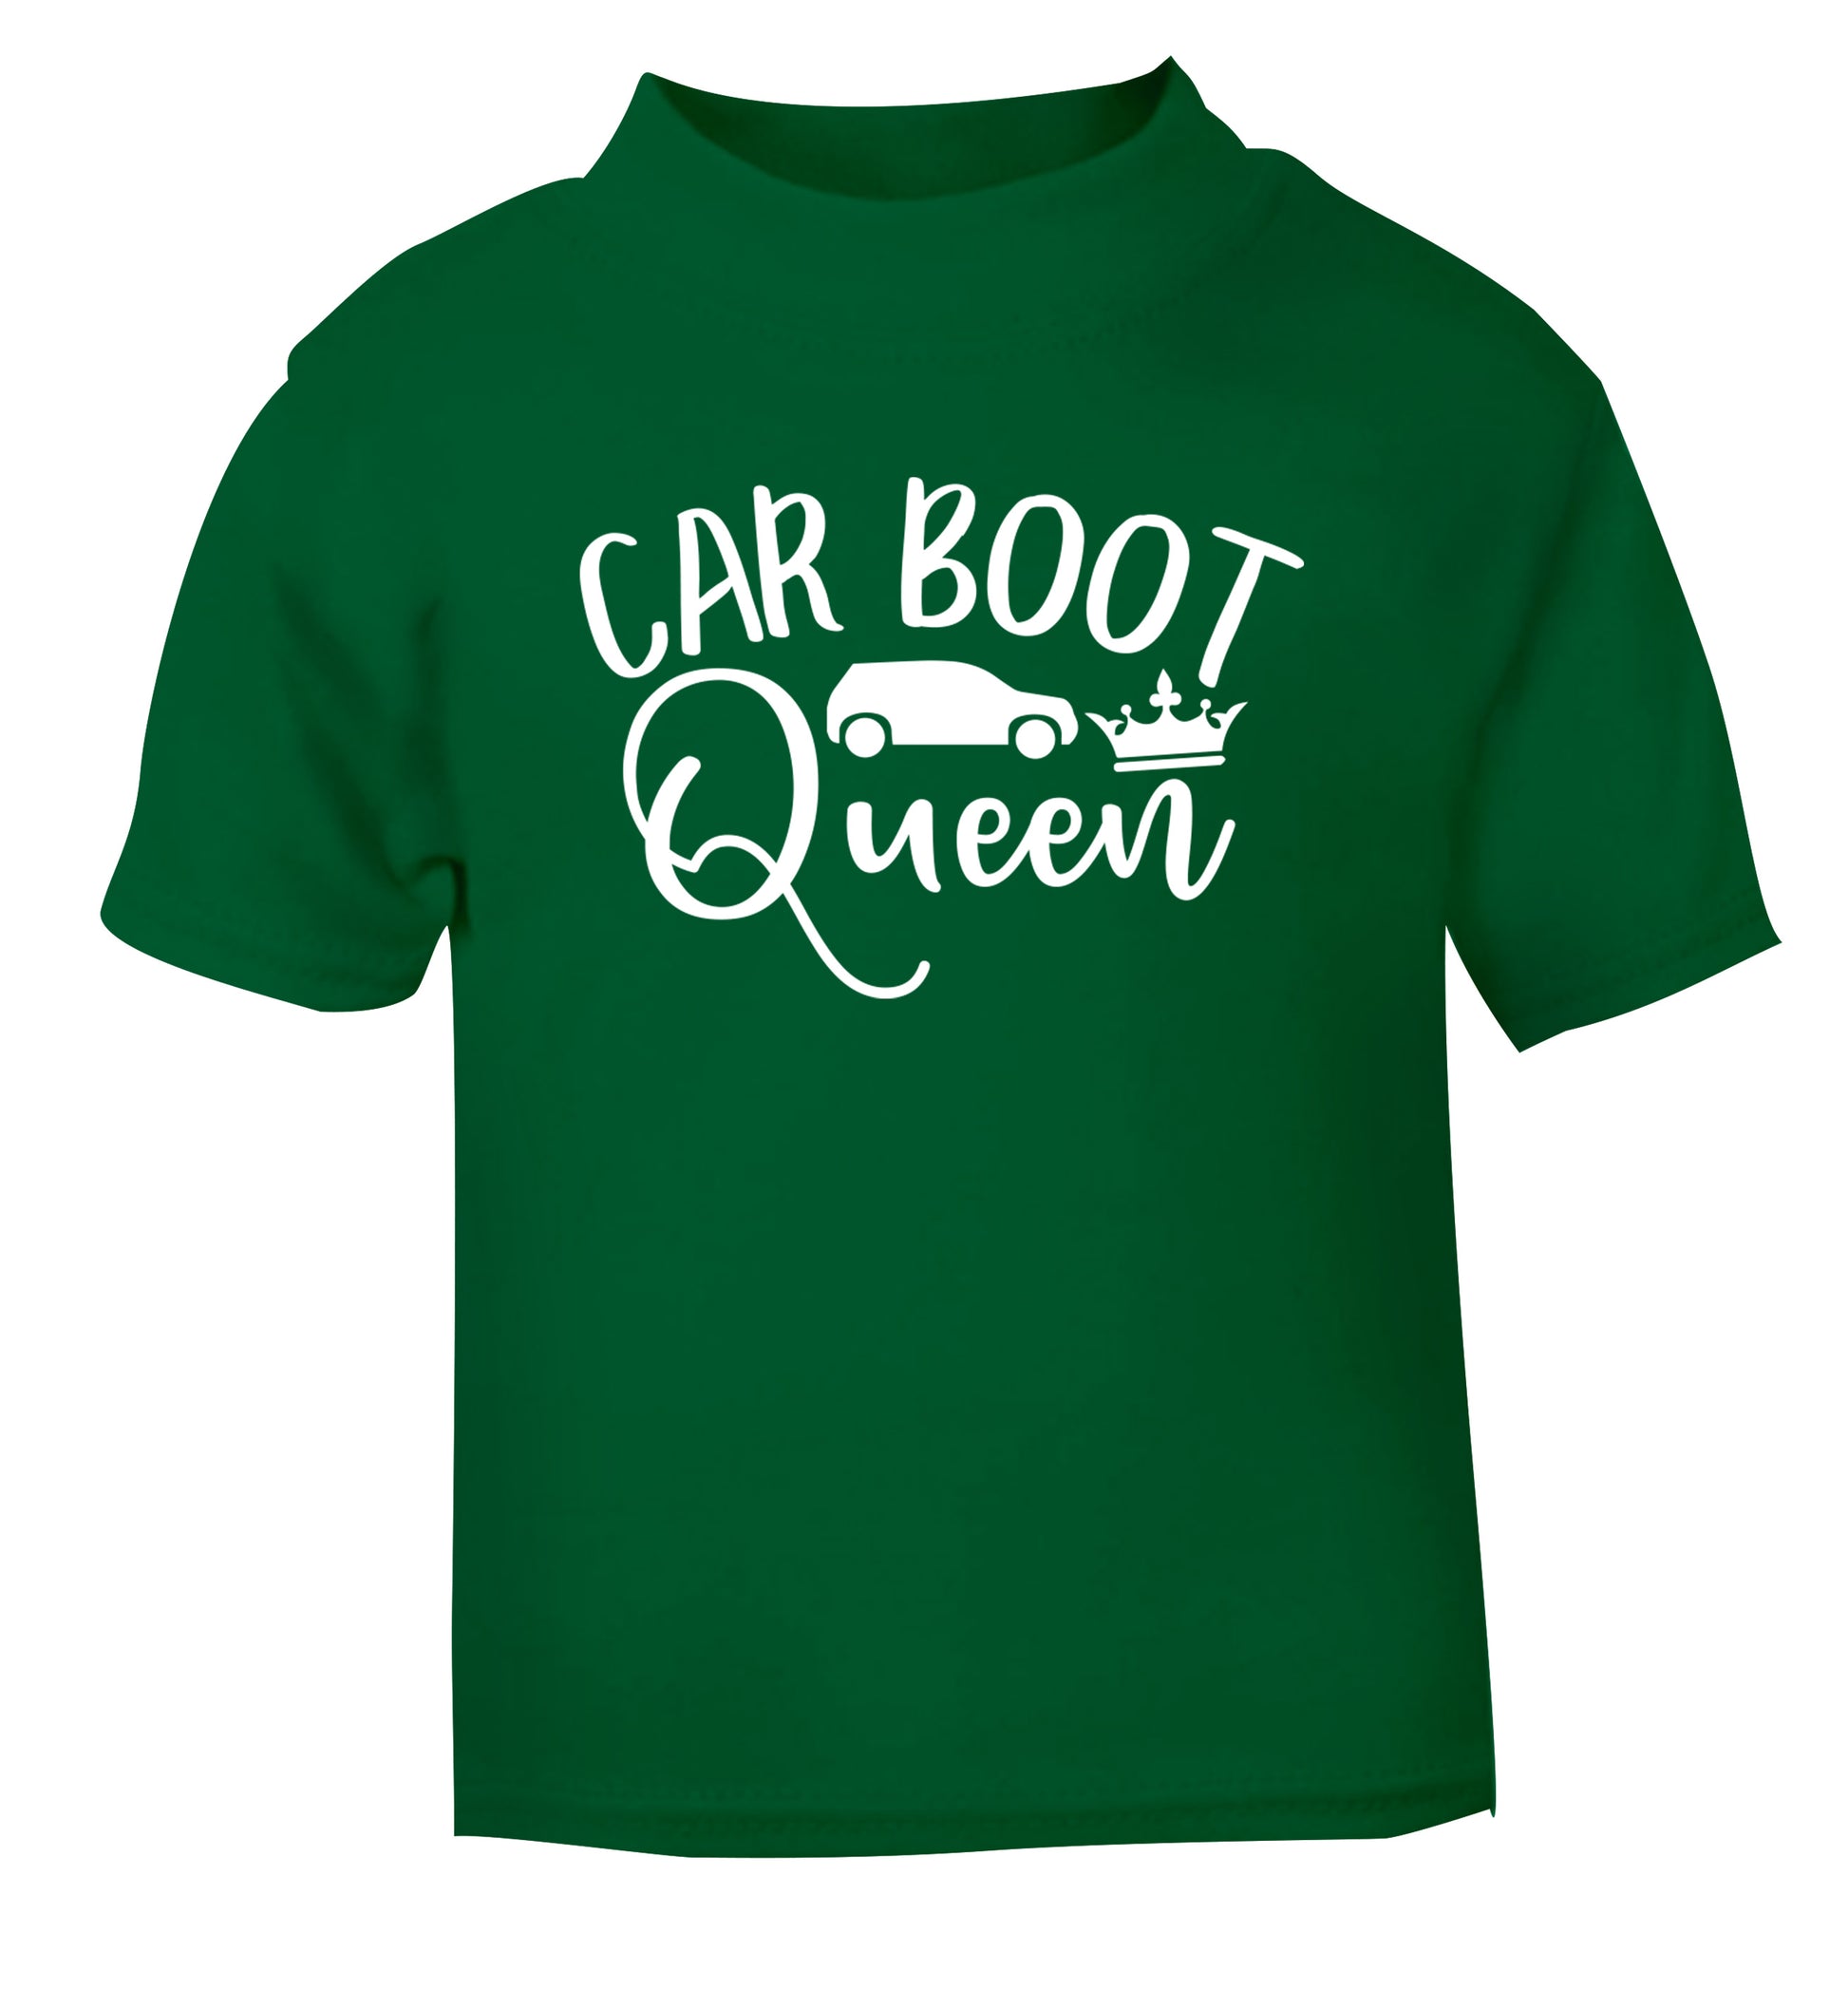 Carboot Queen green Baby Toddler Tshirt 2 Years